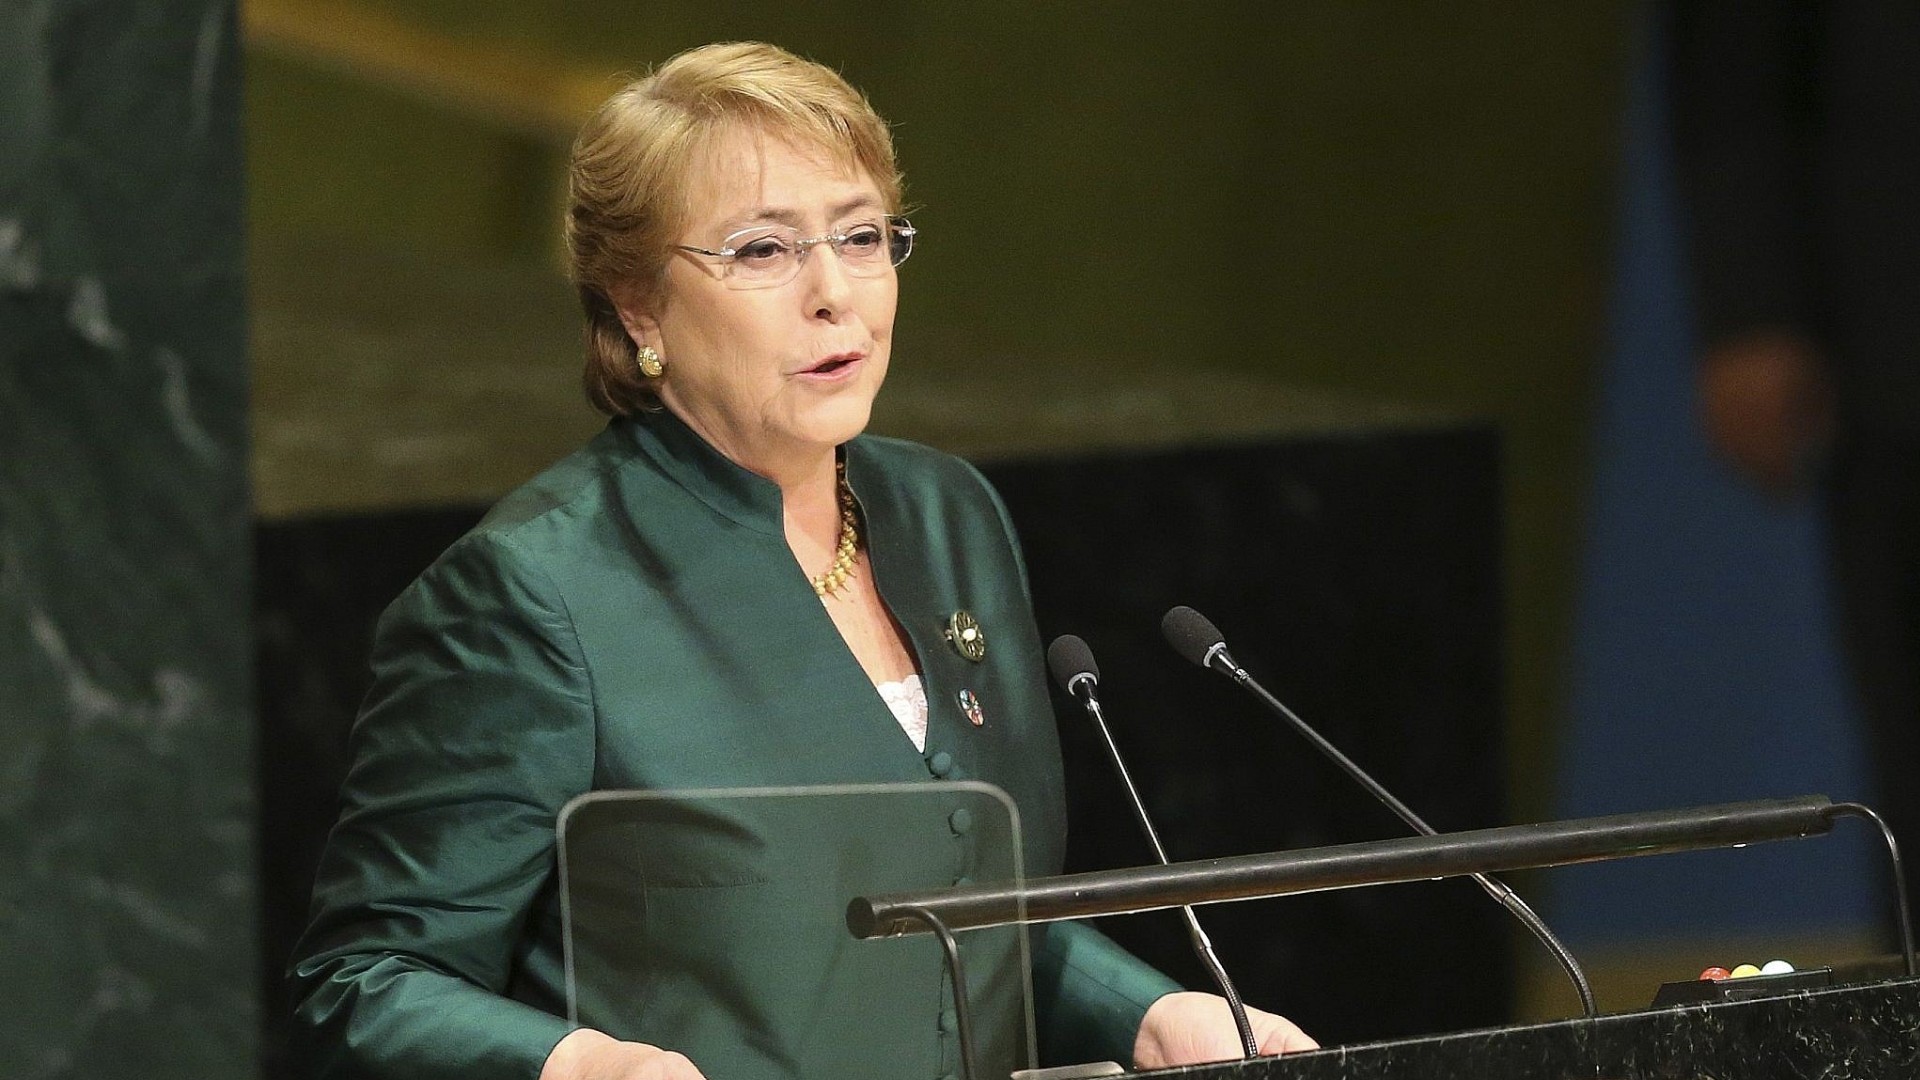 UN Commissioner Recognizes LGBTI Day